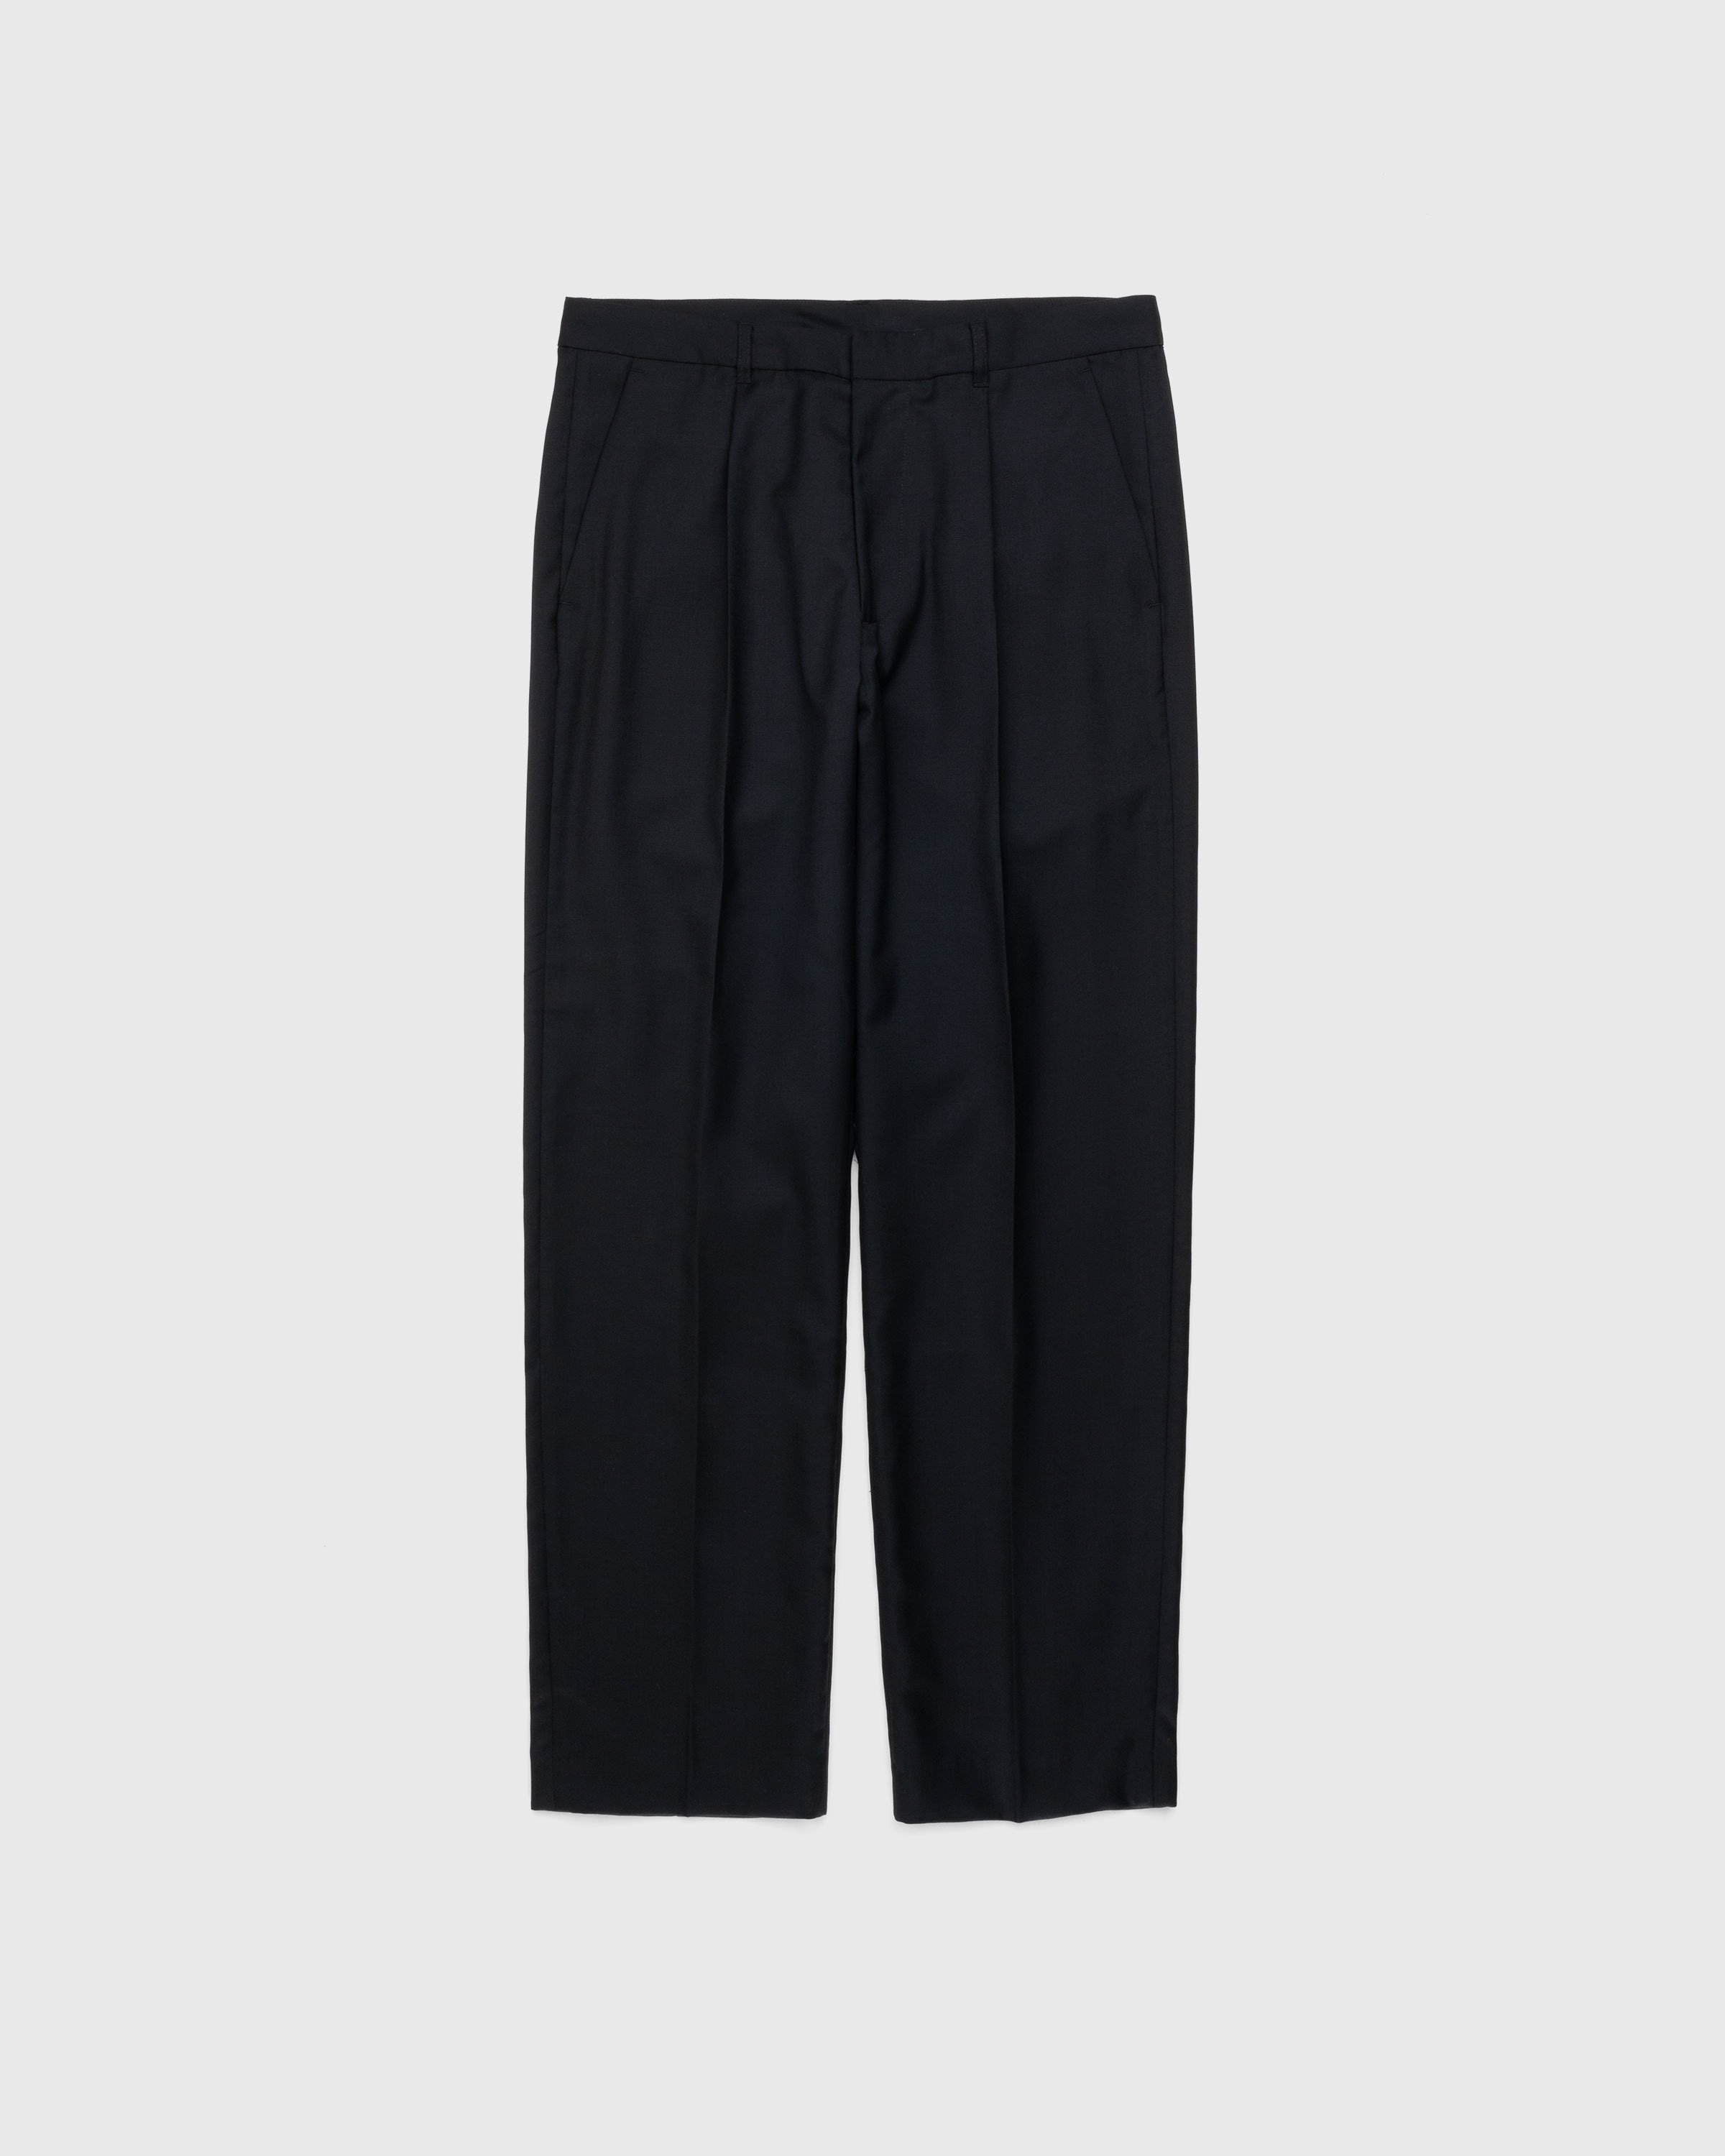 Highsnobiety - Tropical Wool Suiting Pants Black - Clothing - Black - Image 1